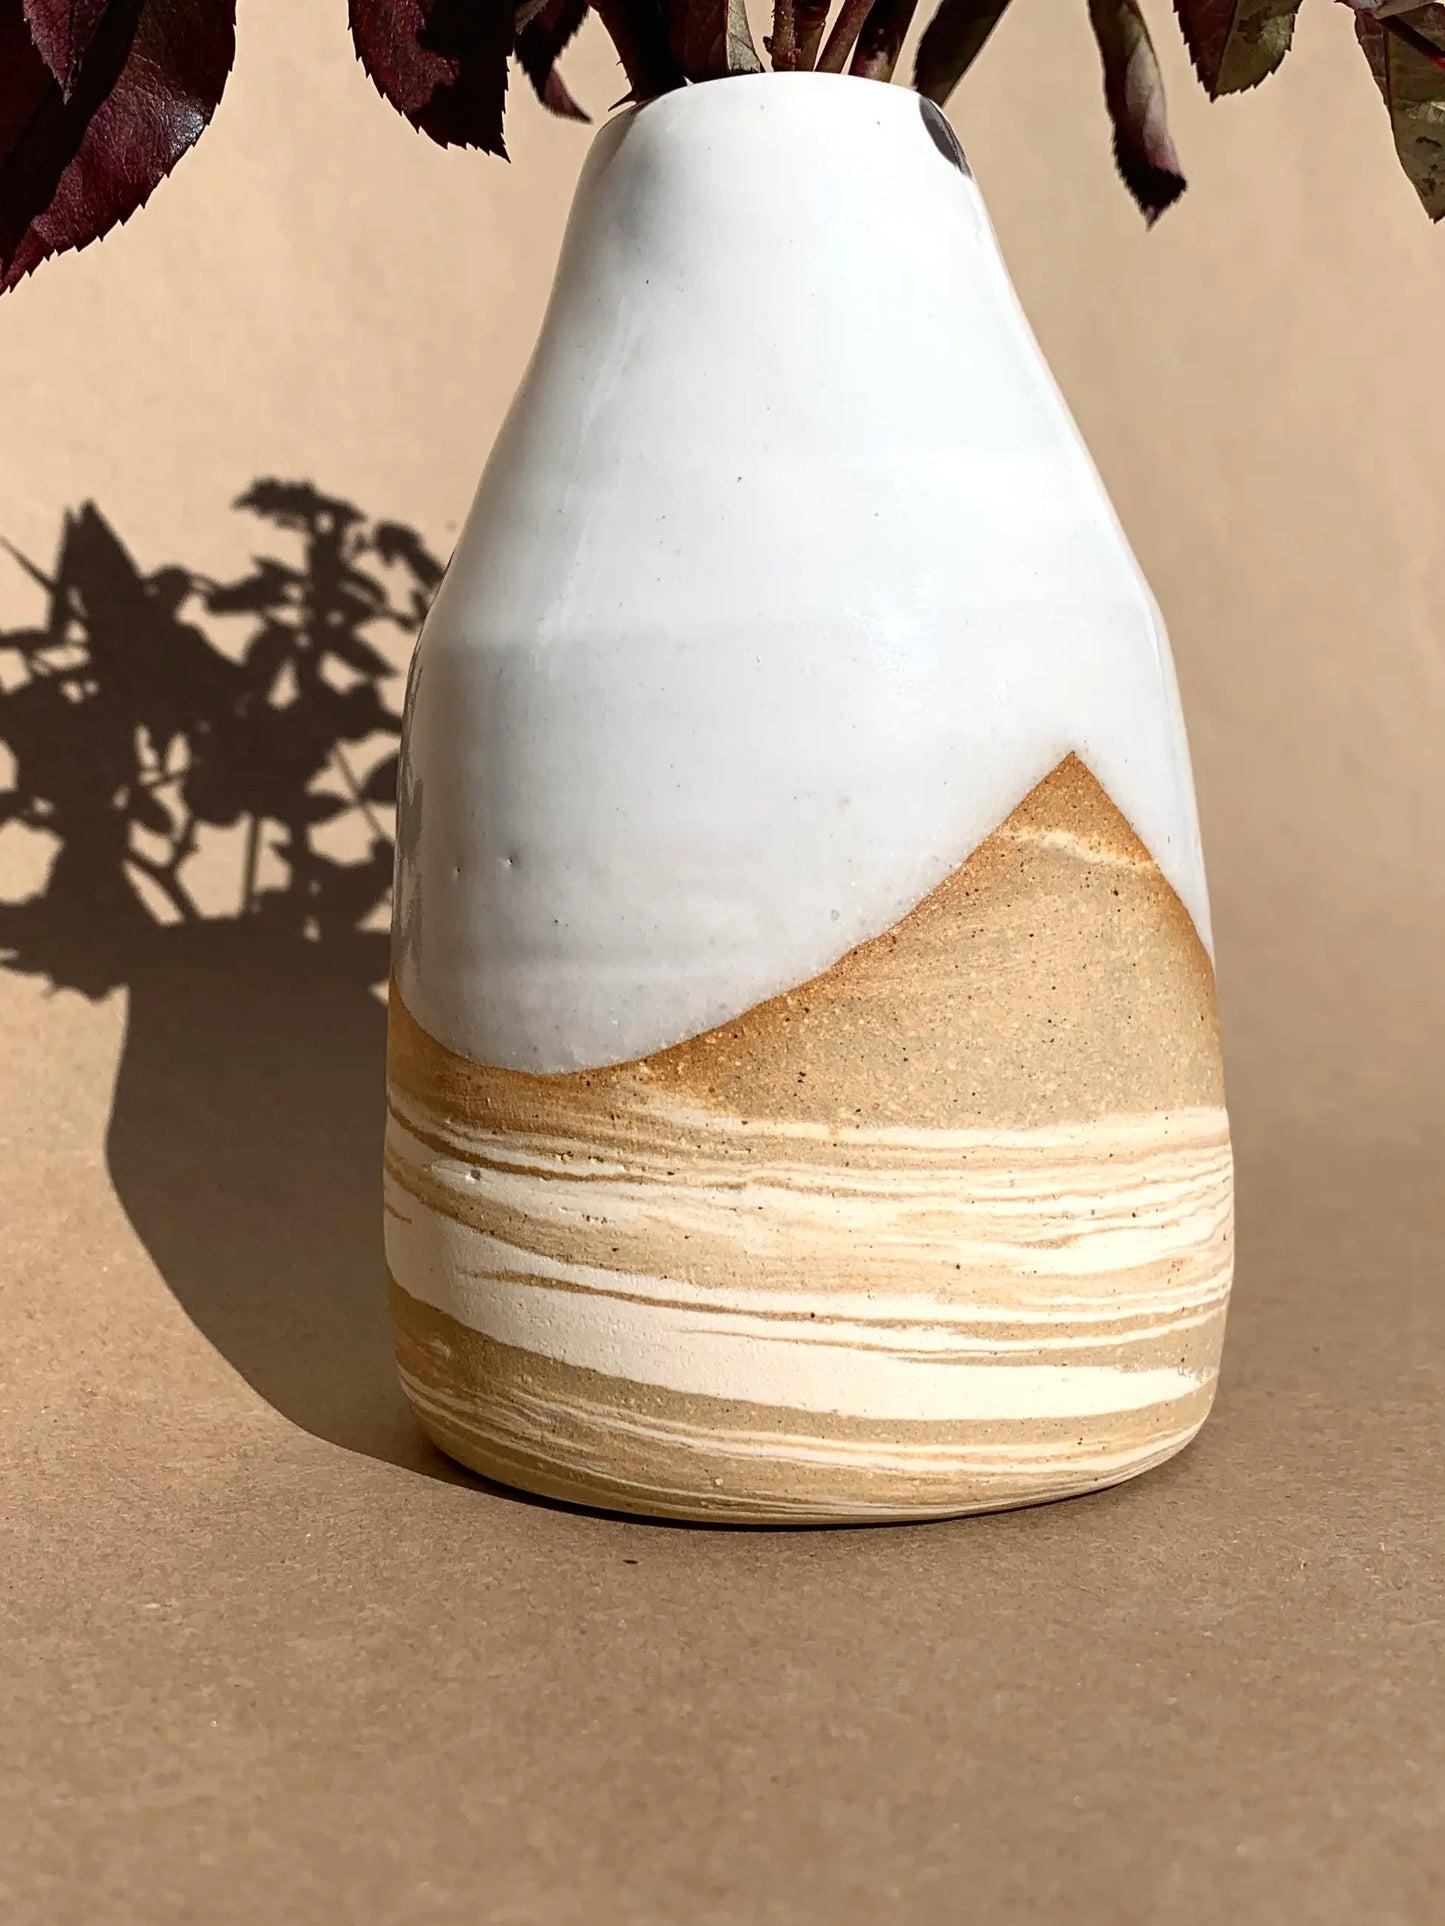 Sandstone Ridge Vase/Candle Holder